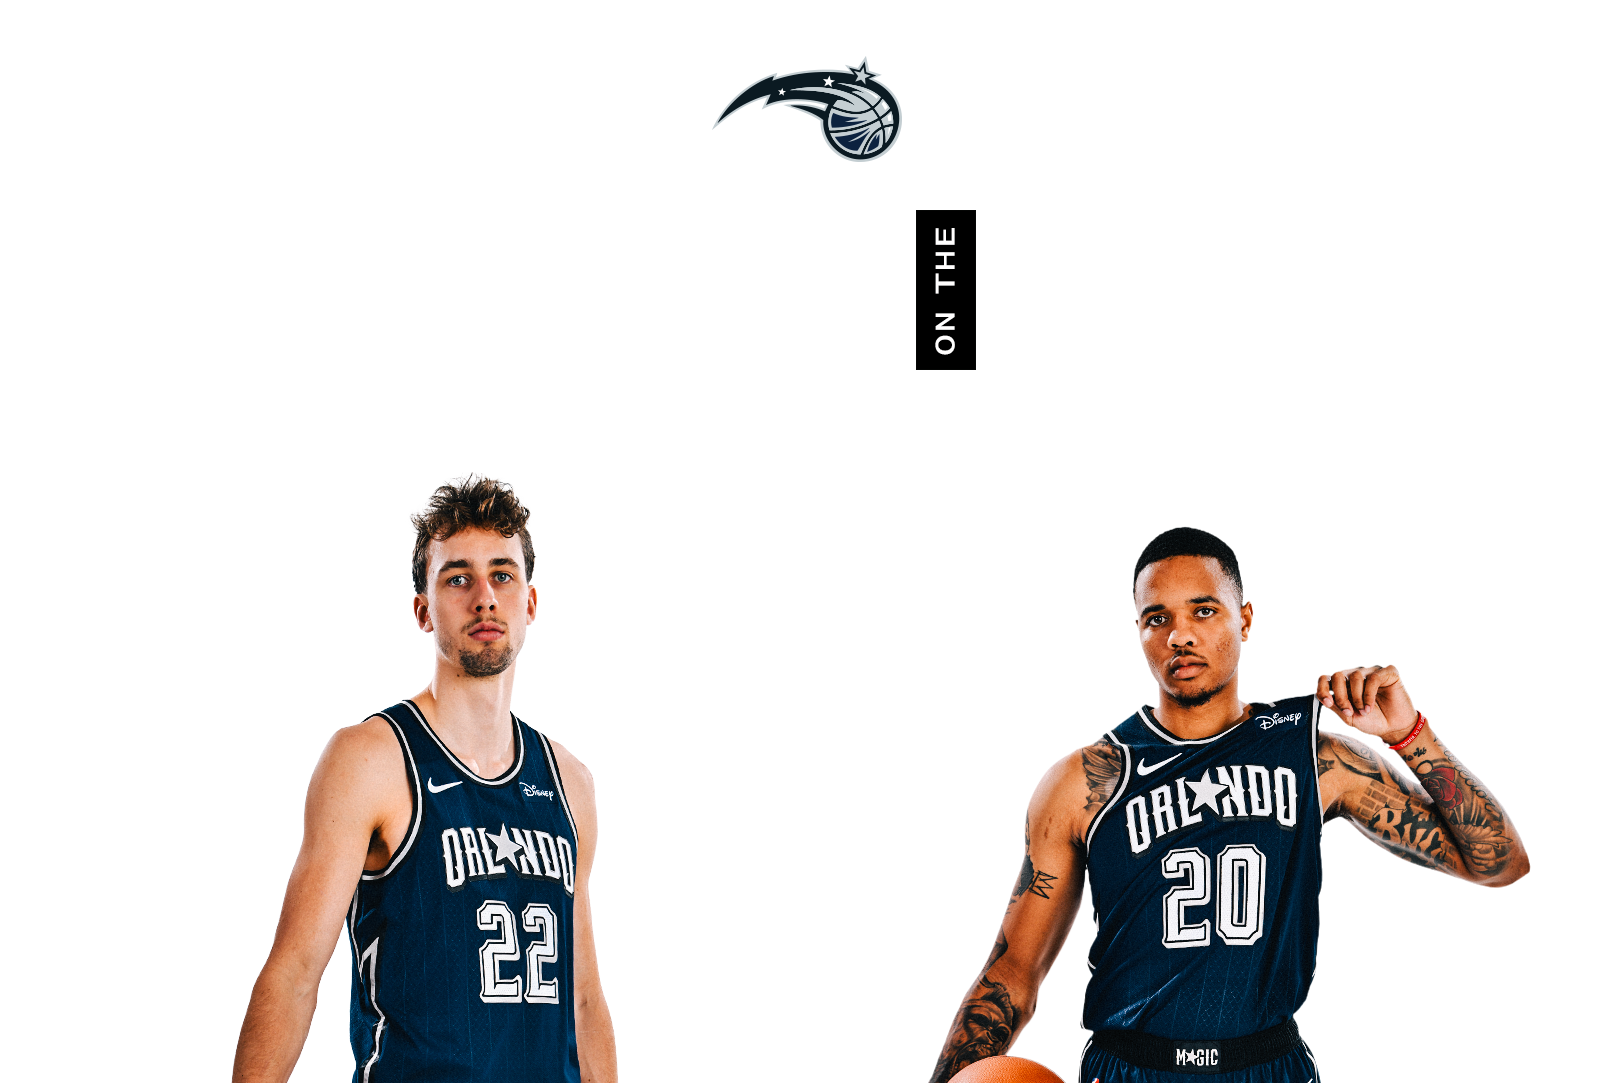 Kingdom on the Rise